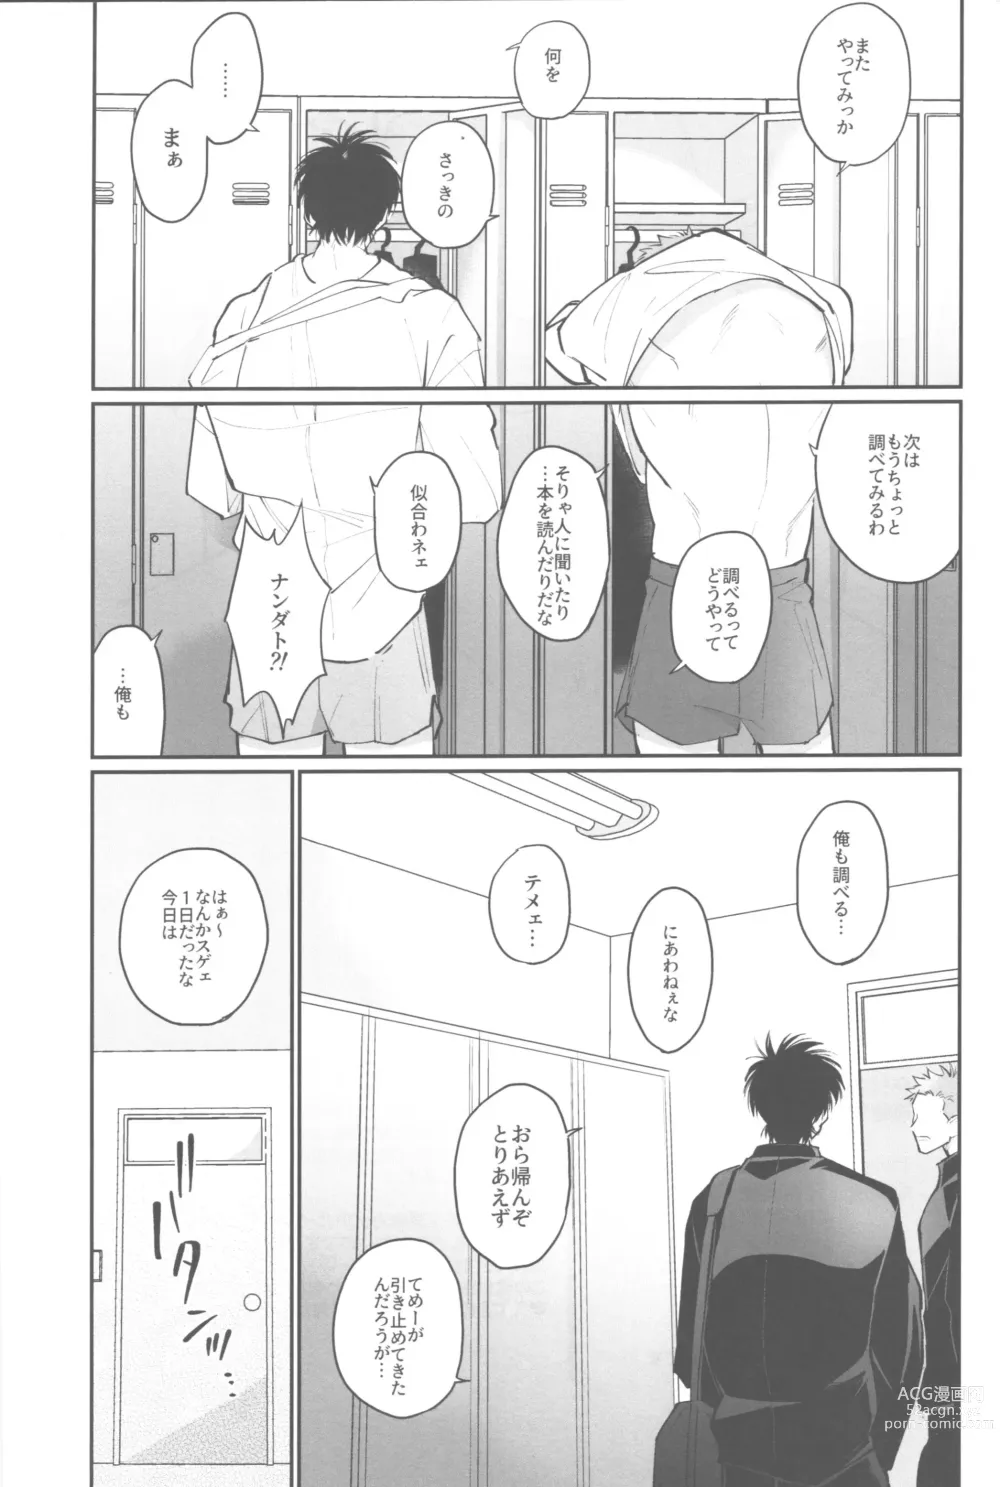 Page 26 of doujinshi Shohoku Kumasaki Rendezvous